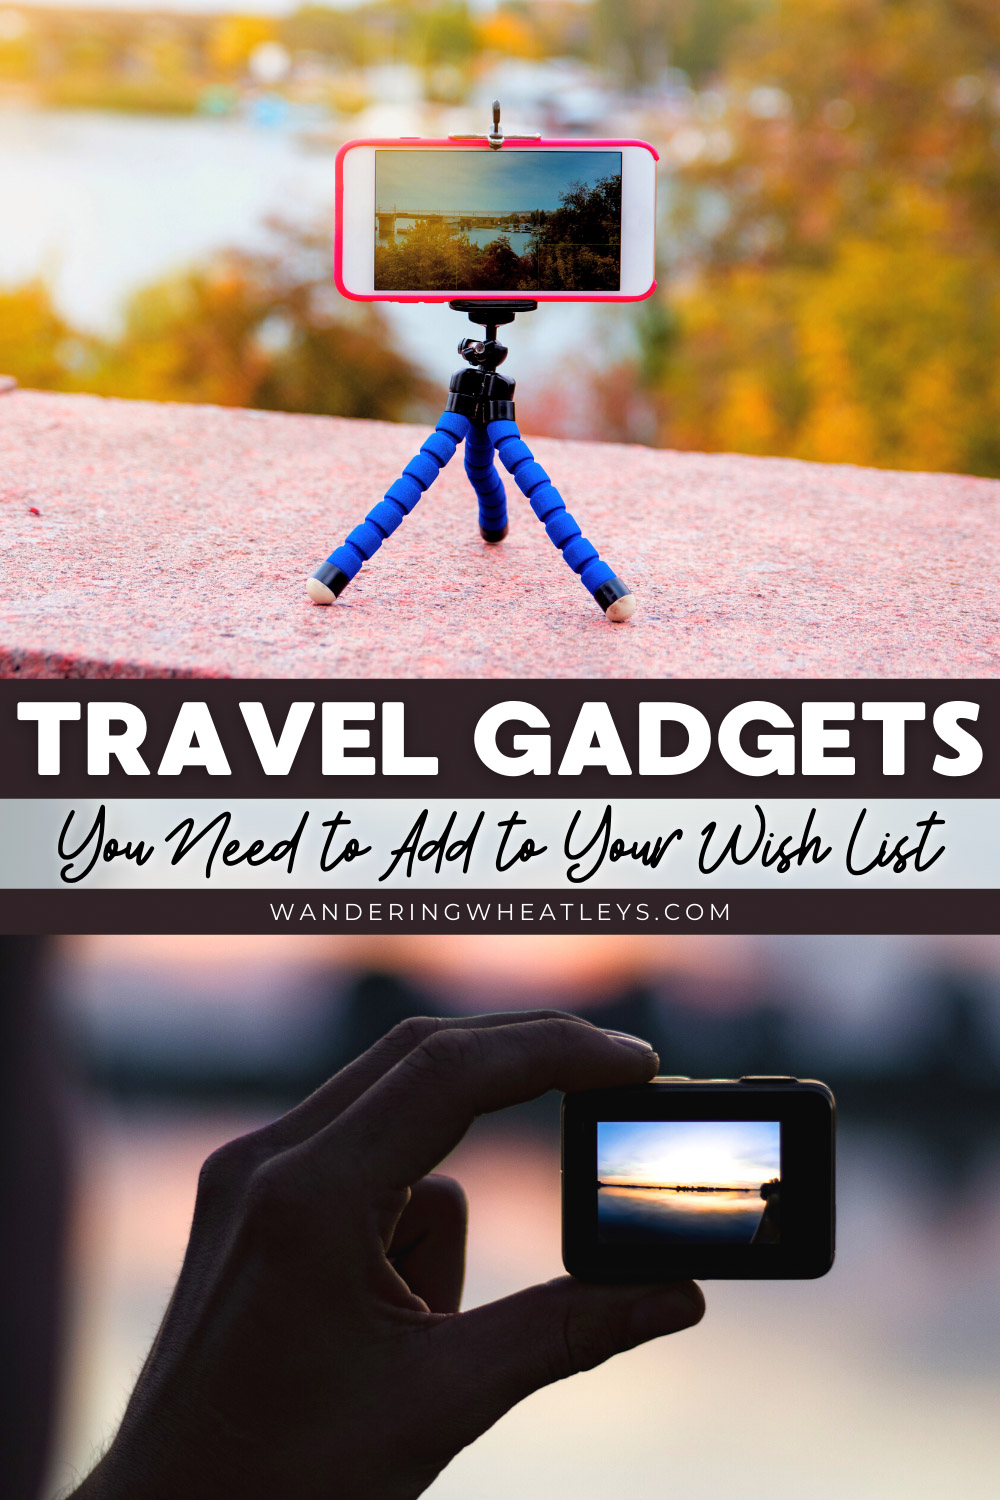 https://wanderingwheatleys.com/wp-content/uploads/2021/09/holiday-gift-guide-awesome-new-travel-gadgets-pinterest-2.jpg